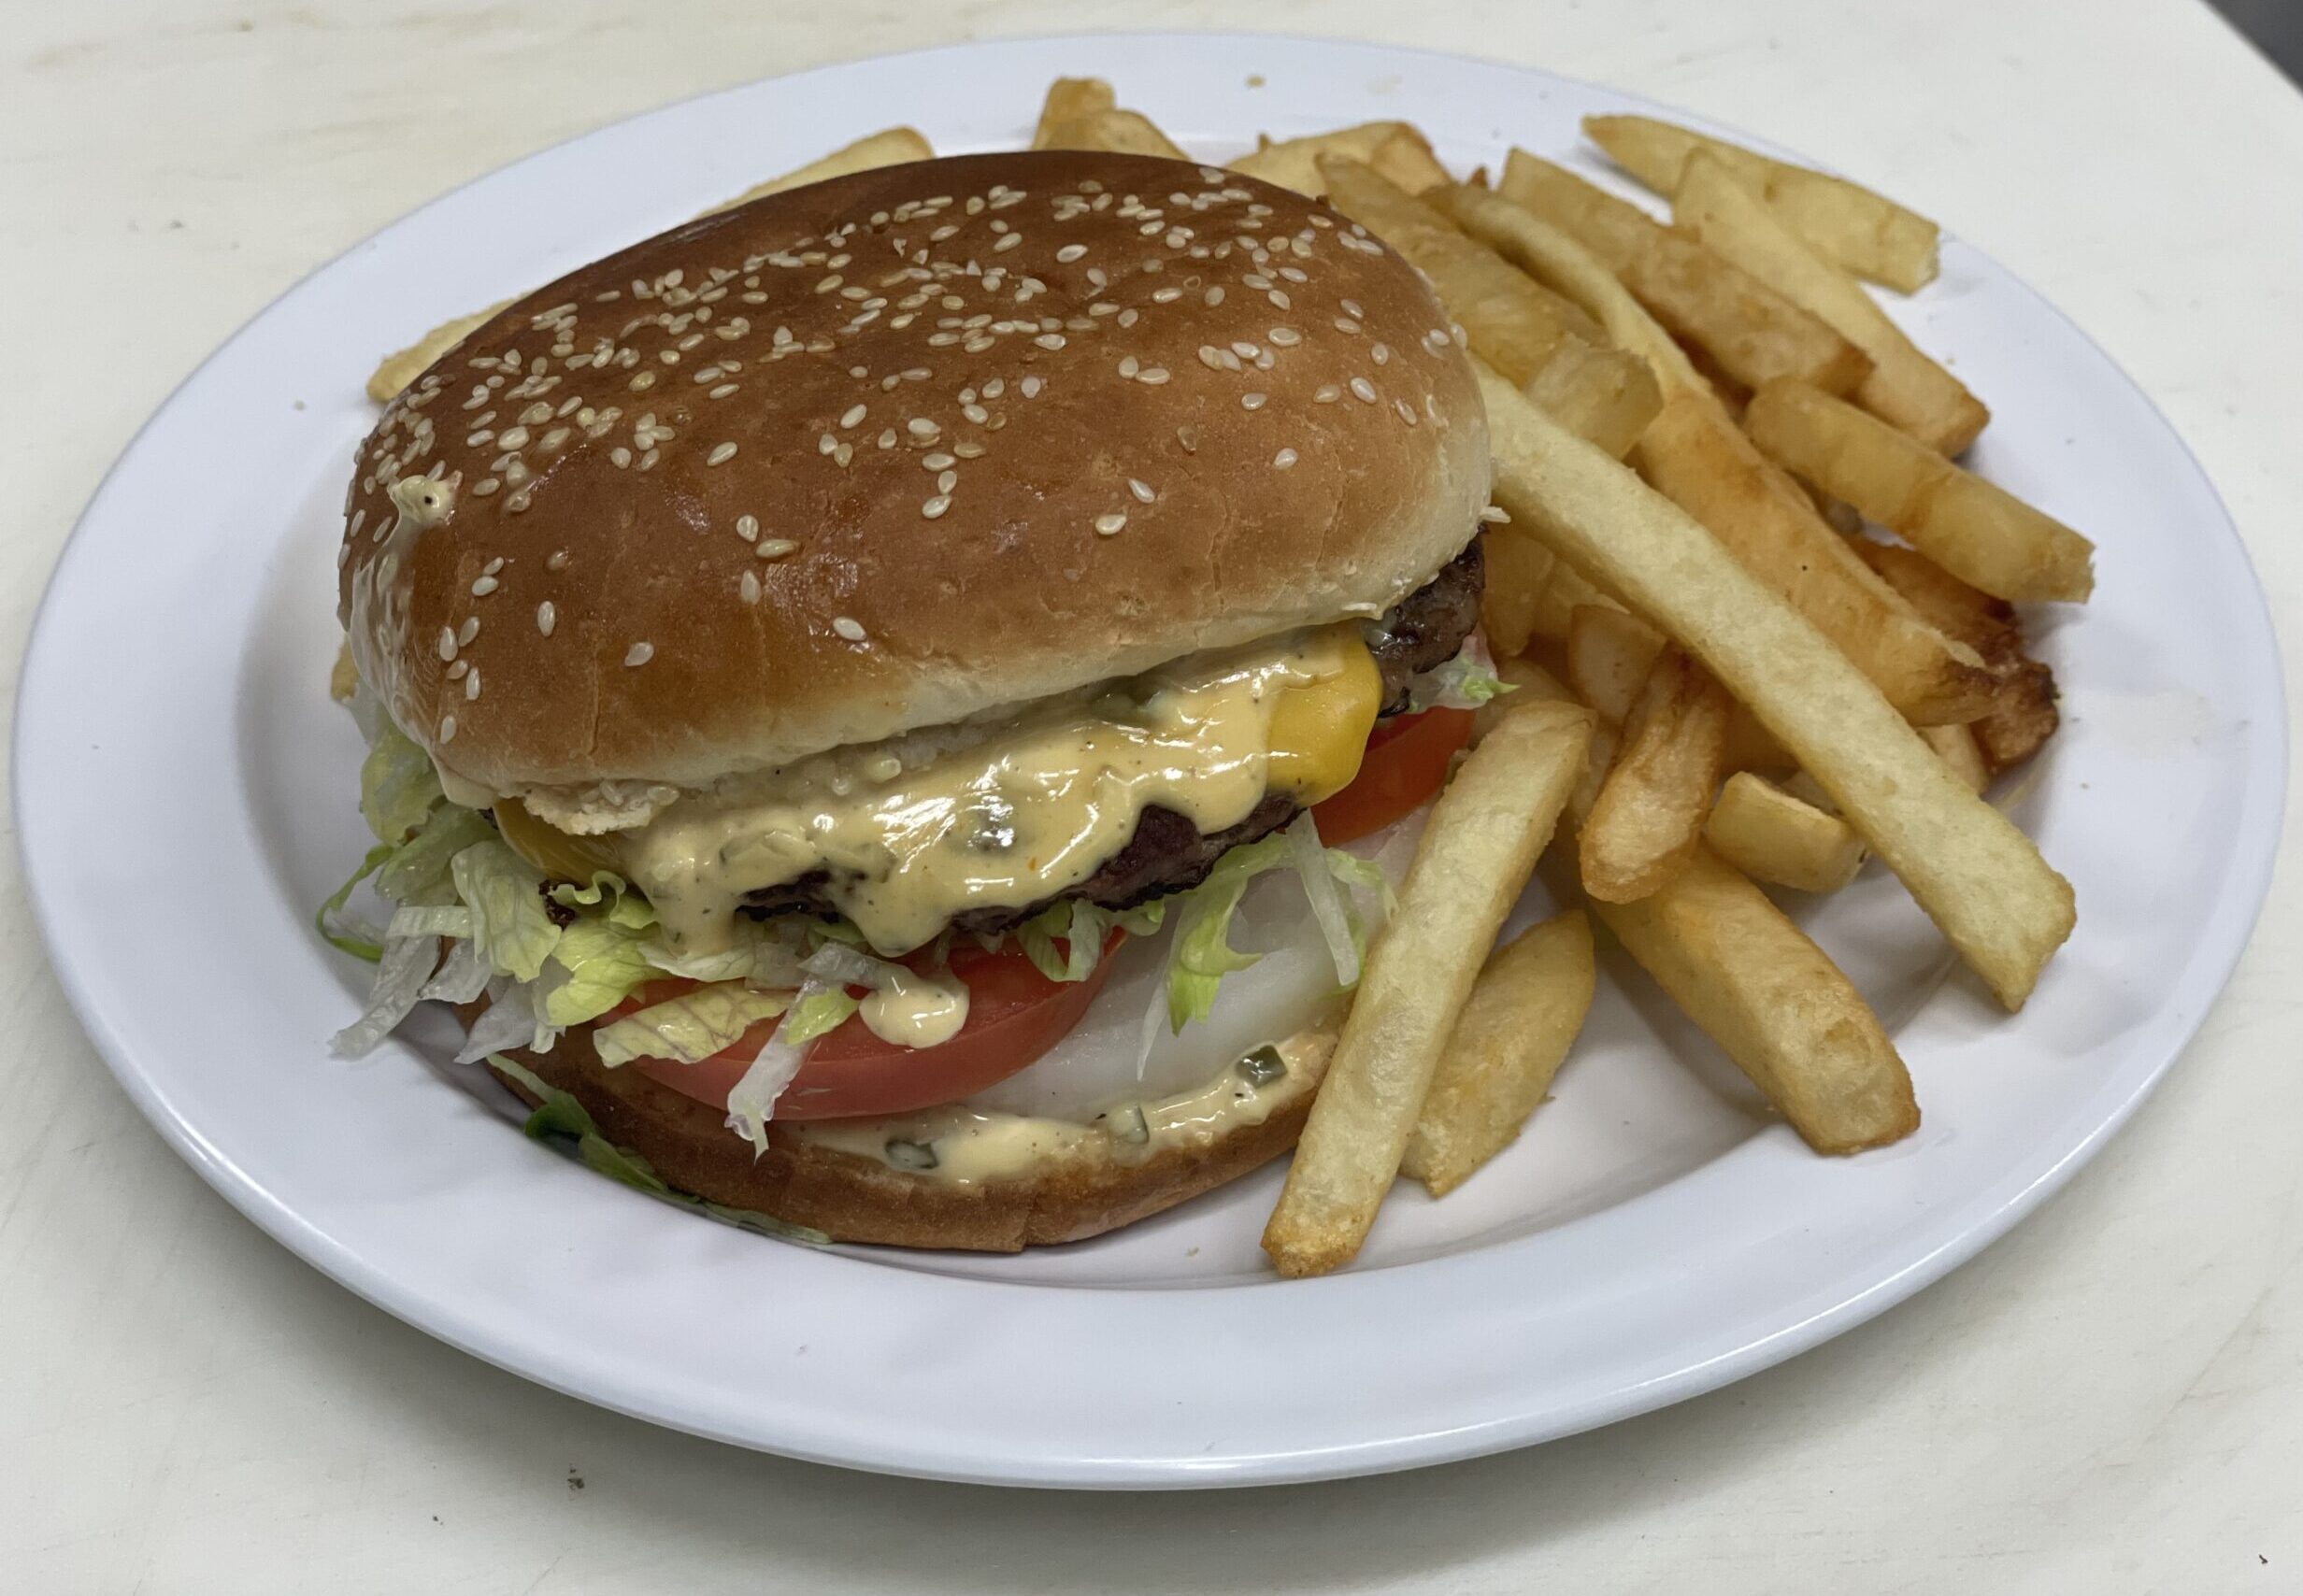 Cheeseburger Combo $11.50